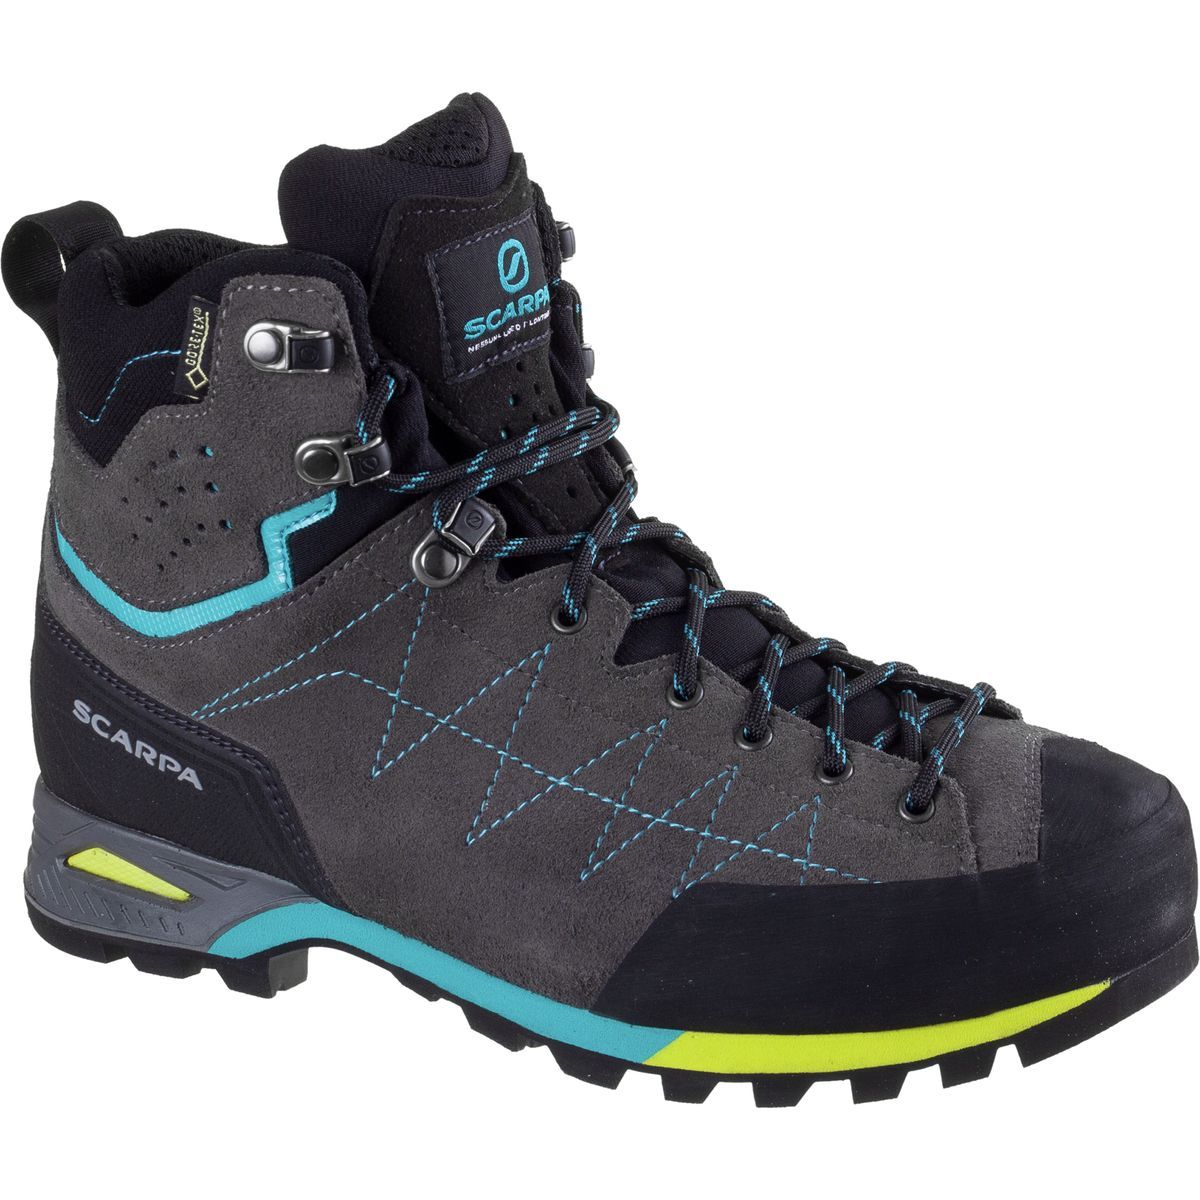 best lightweight gore tex hiking boots